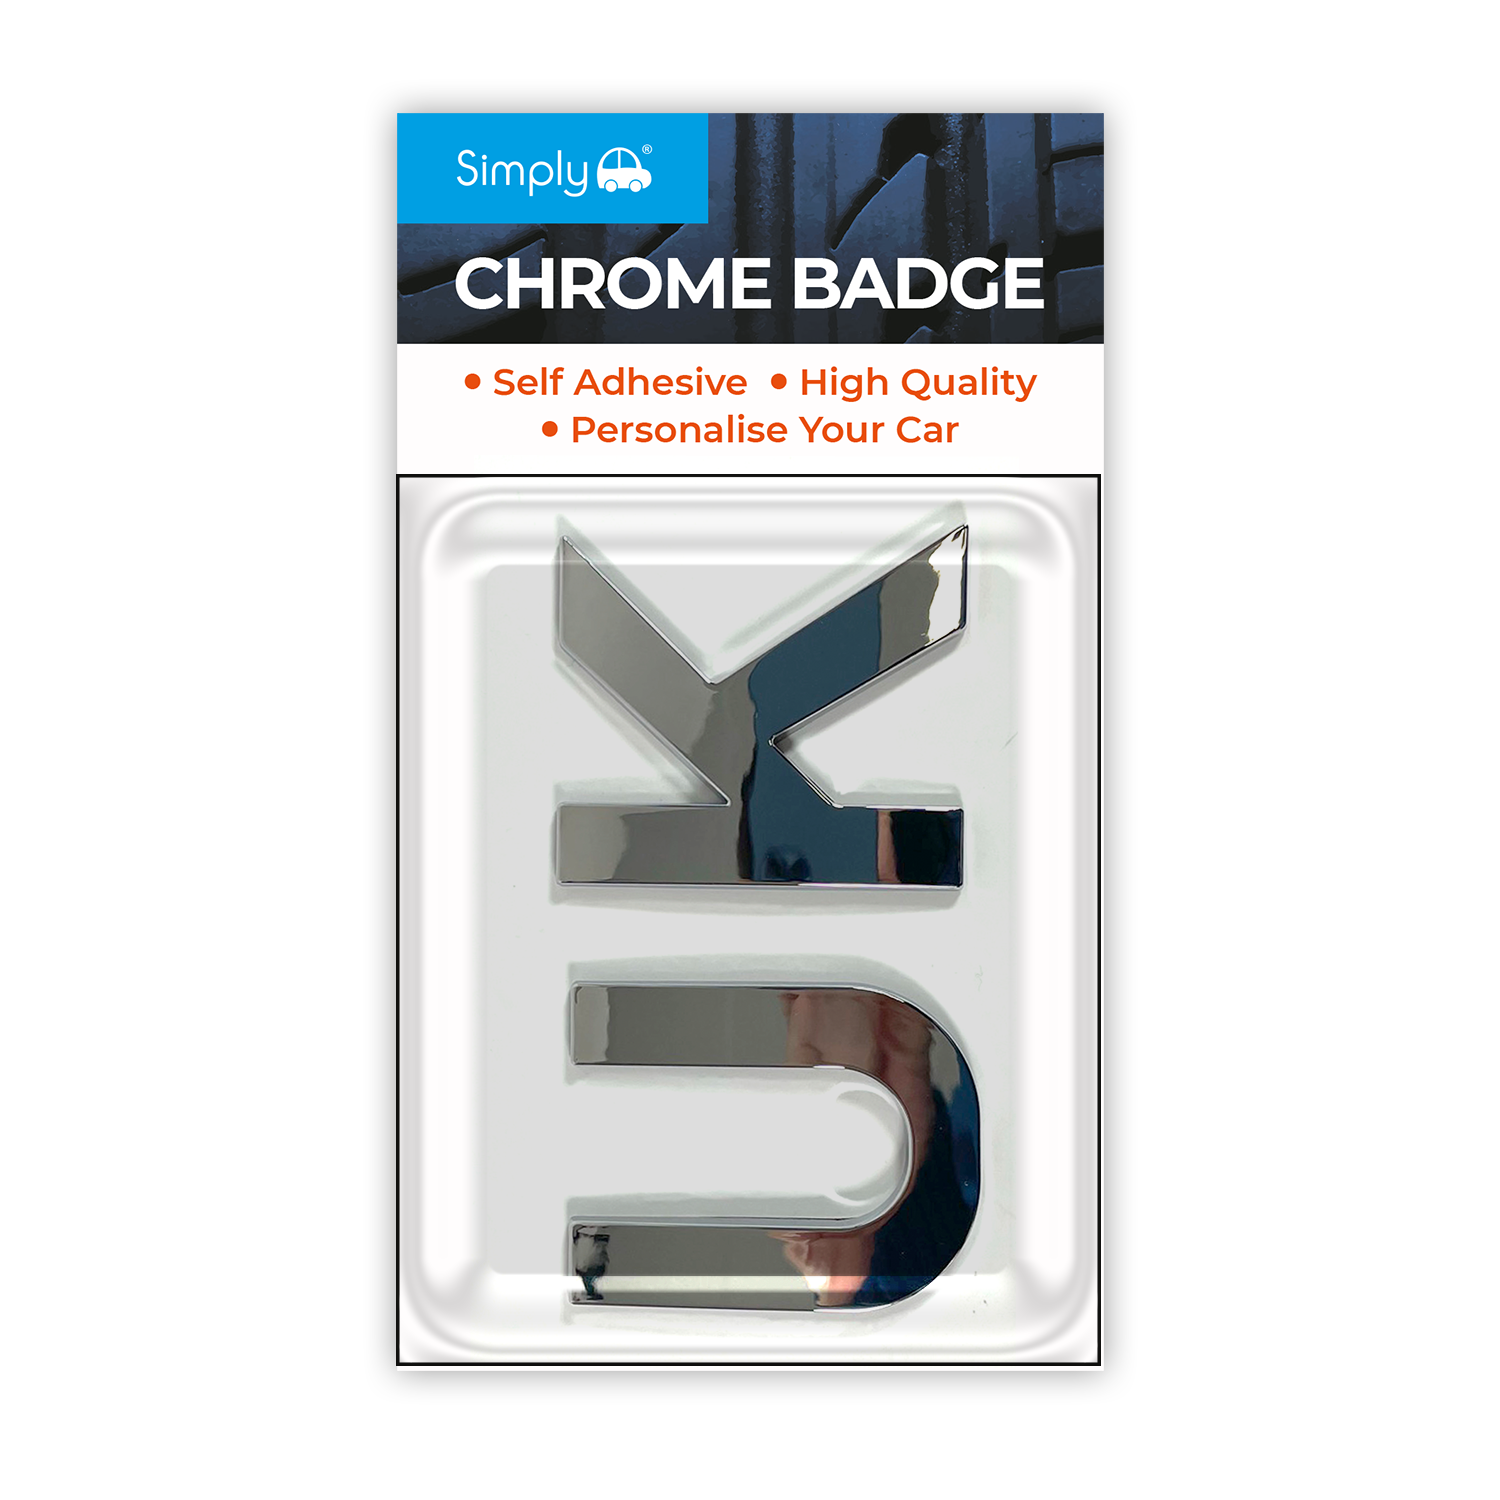 Simply Auto 'UK' Simply Chrome Badge